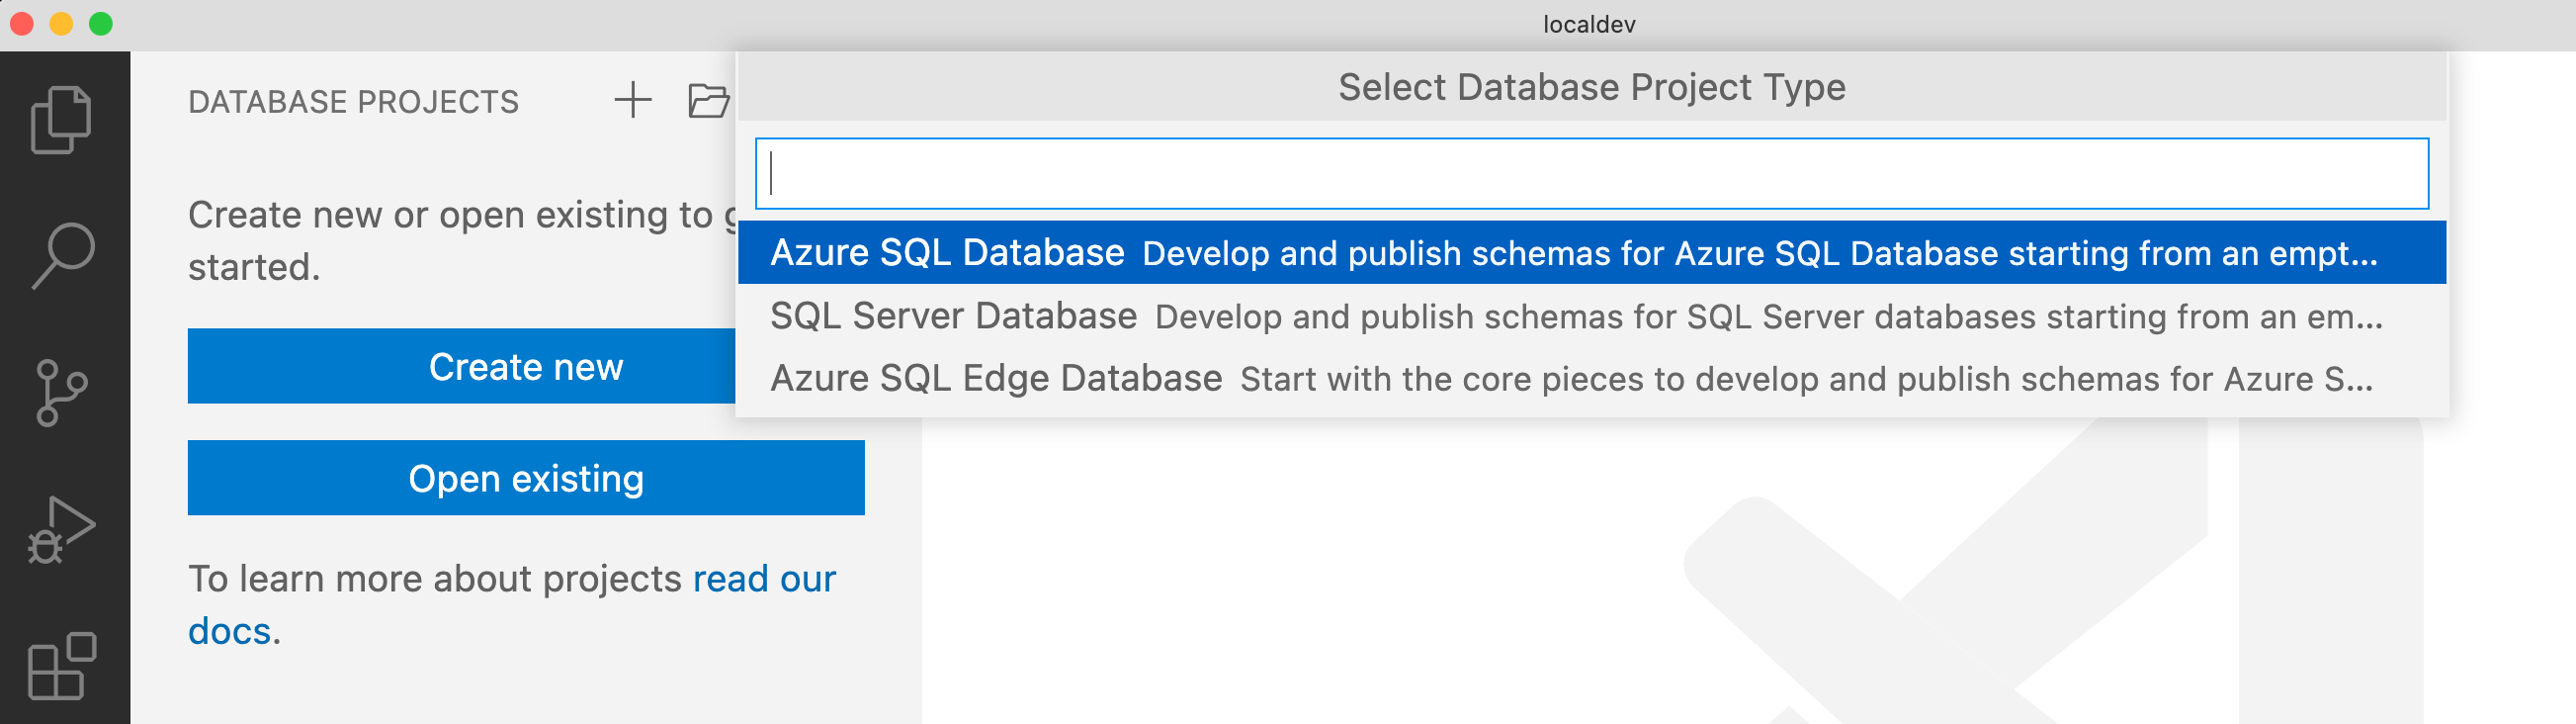 Visual Studio Code에서 데이터베이스 프로젝트의 프로젝트 유형을 선택하는 스크린샷